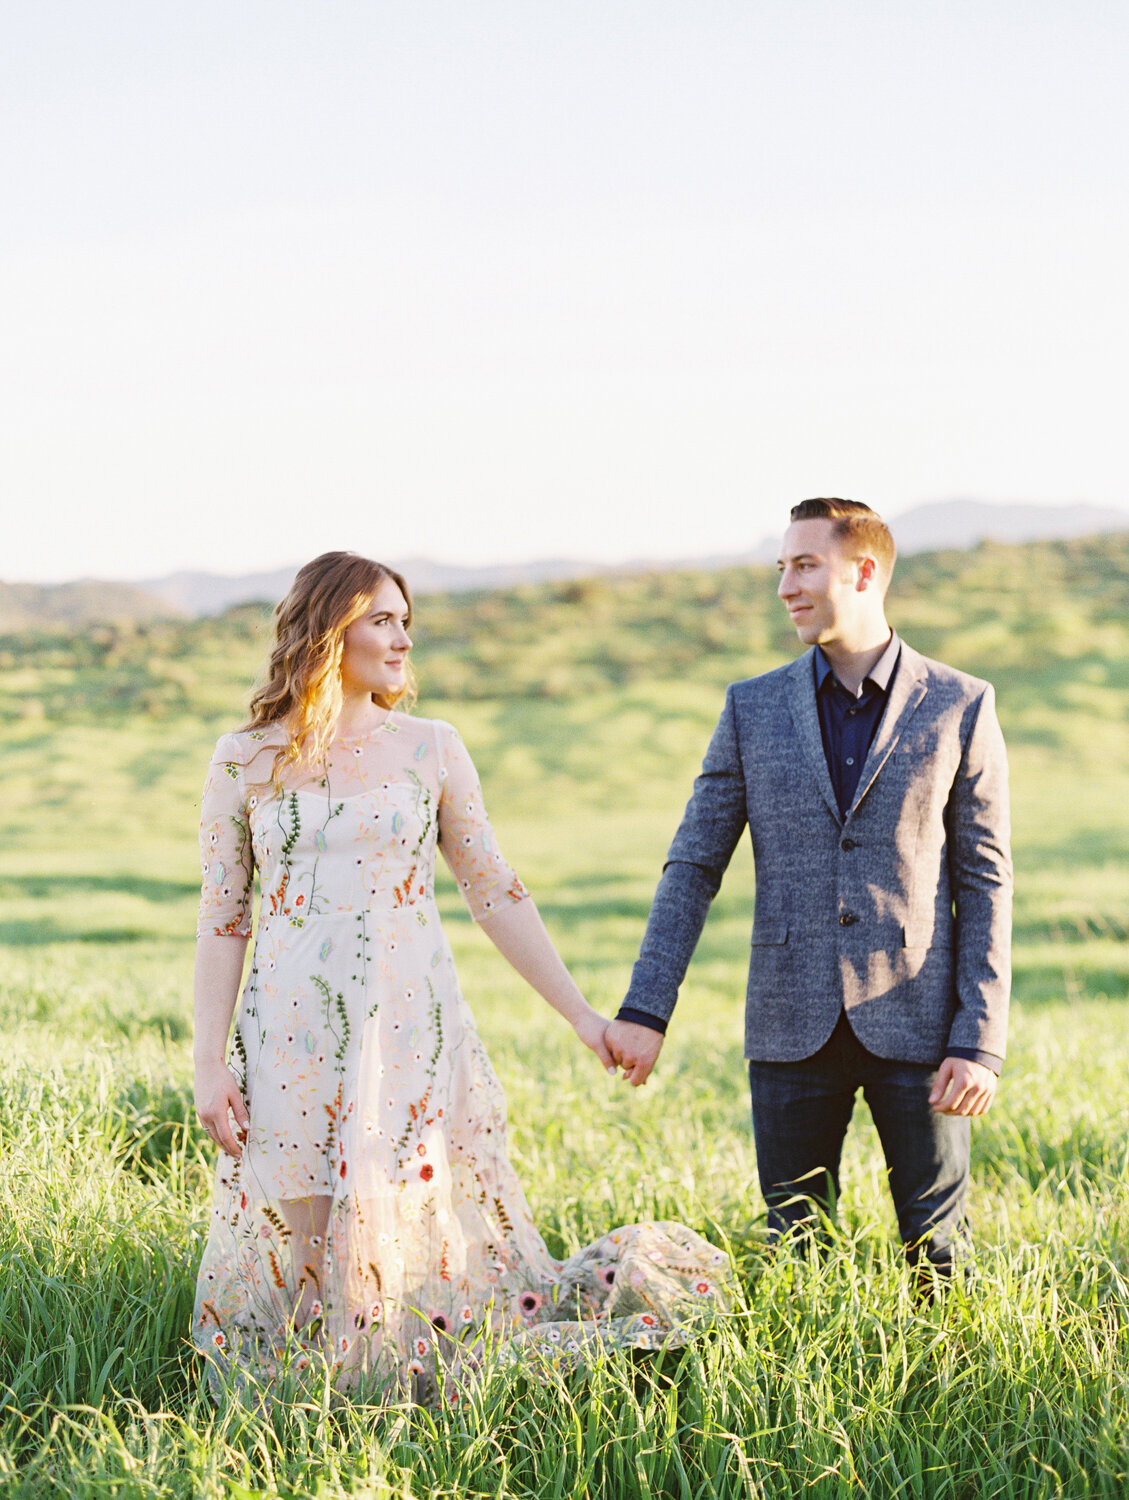 wisteria-photography.com | Wisteria Photography | Wildwood Regional Park | Weddings Engagement | Southern California Photographer-10.jpg